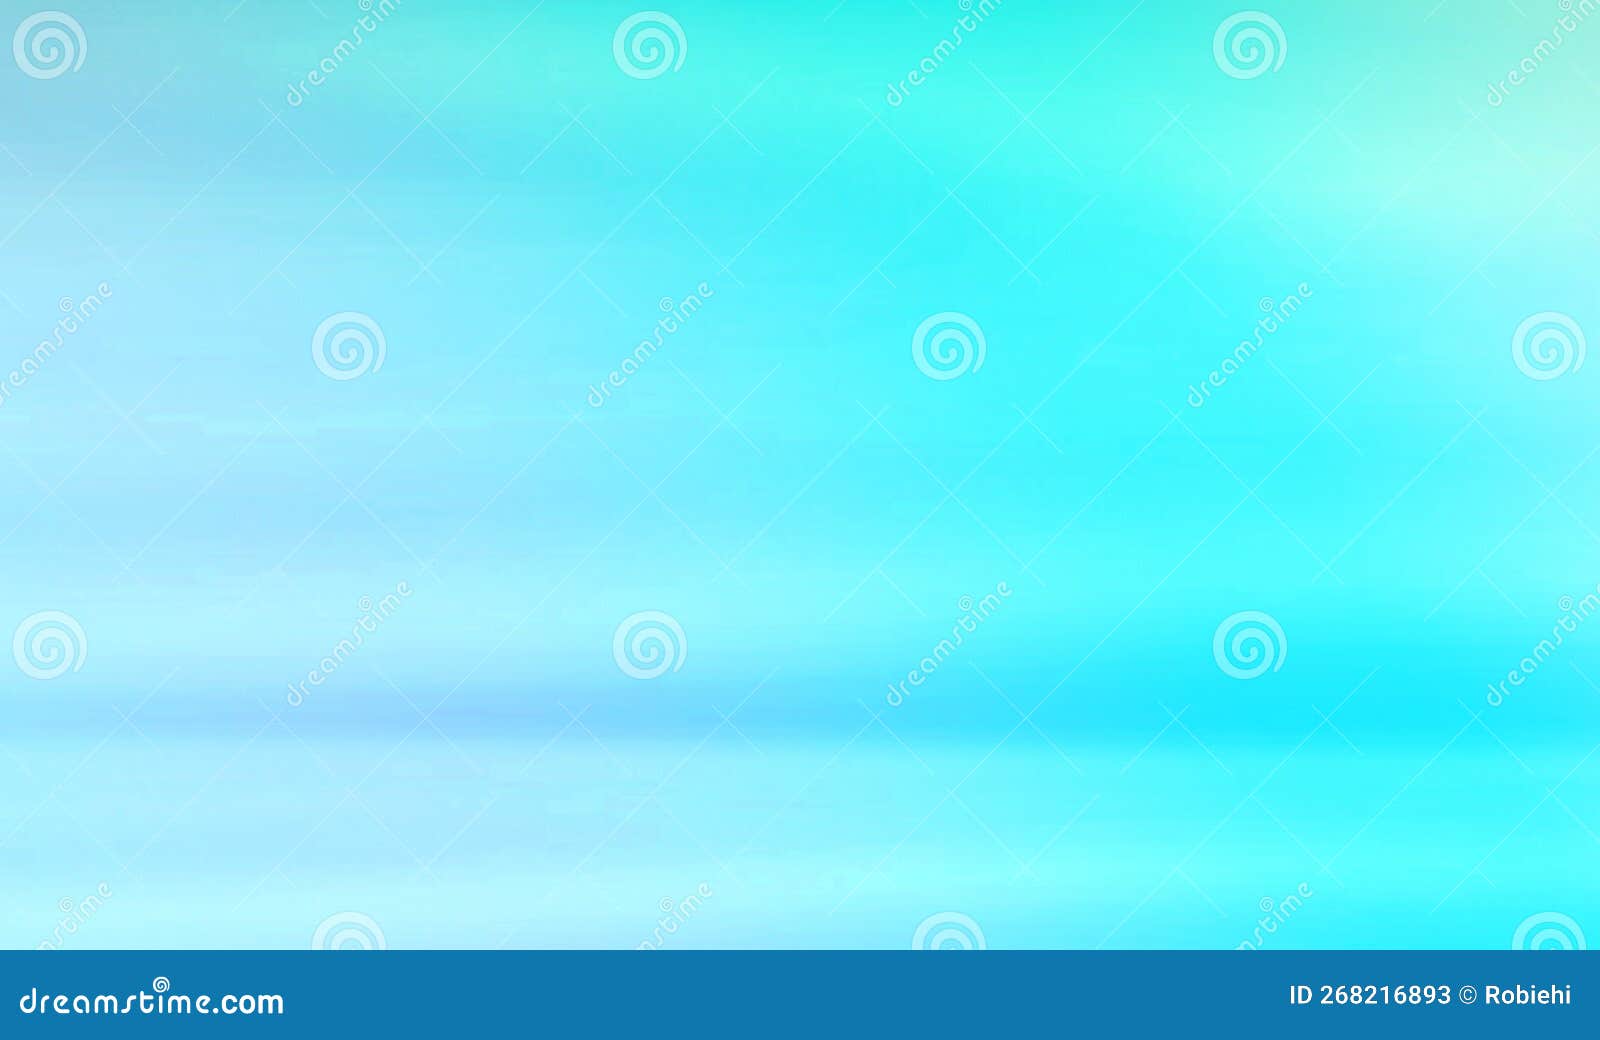 Plain Light Blue Brign Color Pattern Banner Background Stock Illustration -  Illustration of graphic, gradient: 268216893